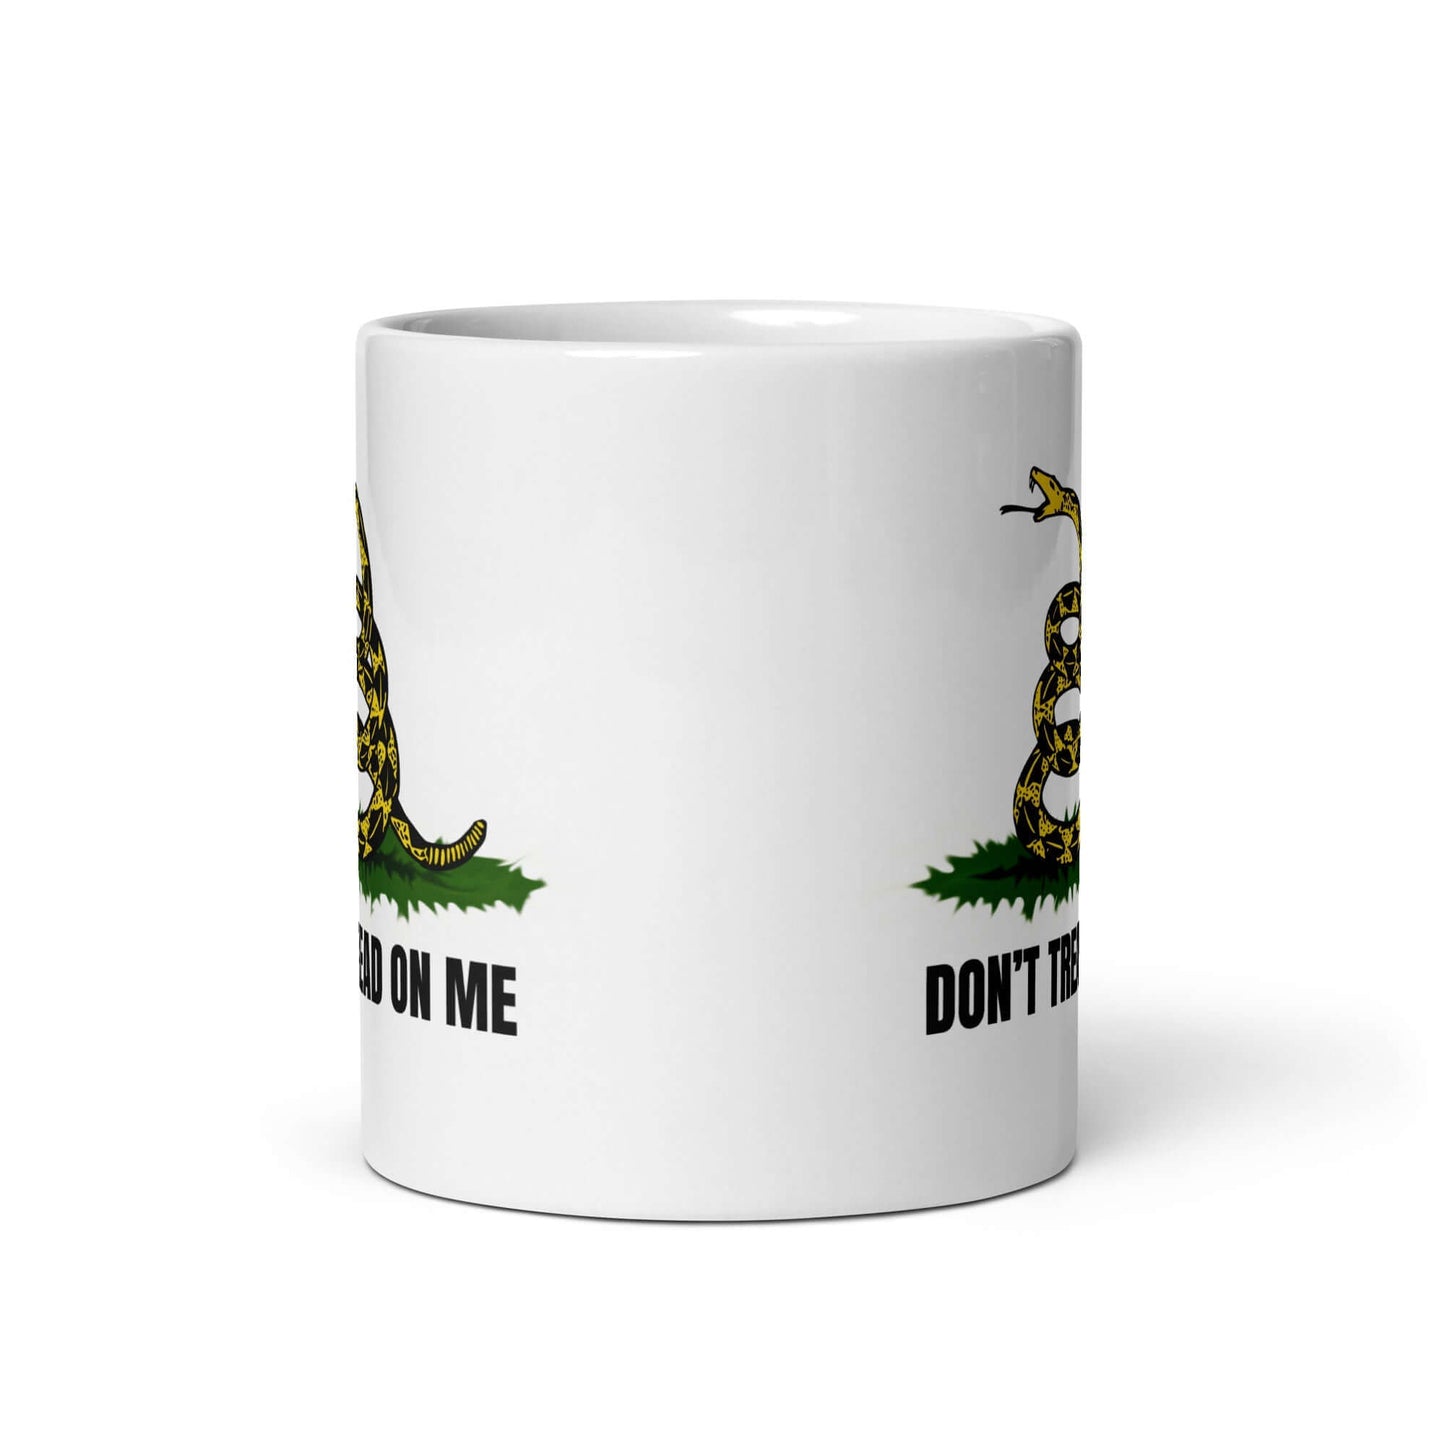 Don't tread on me - White glossy mug - Horrible Designs